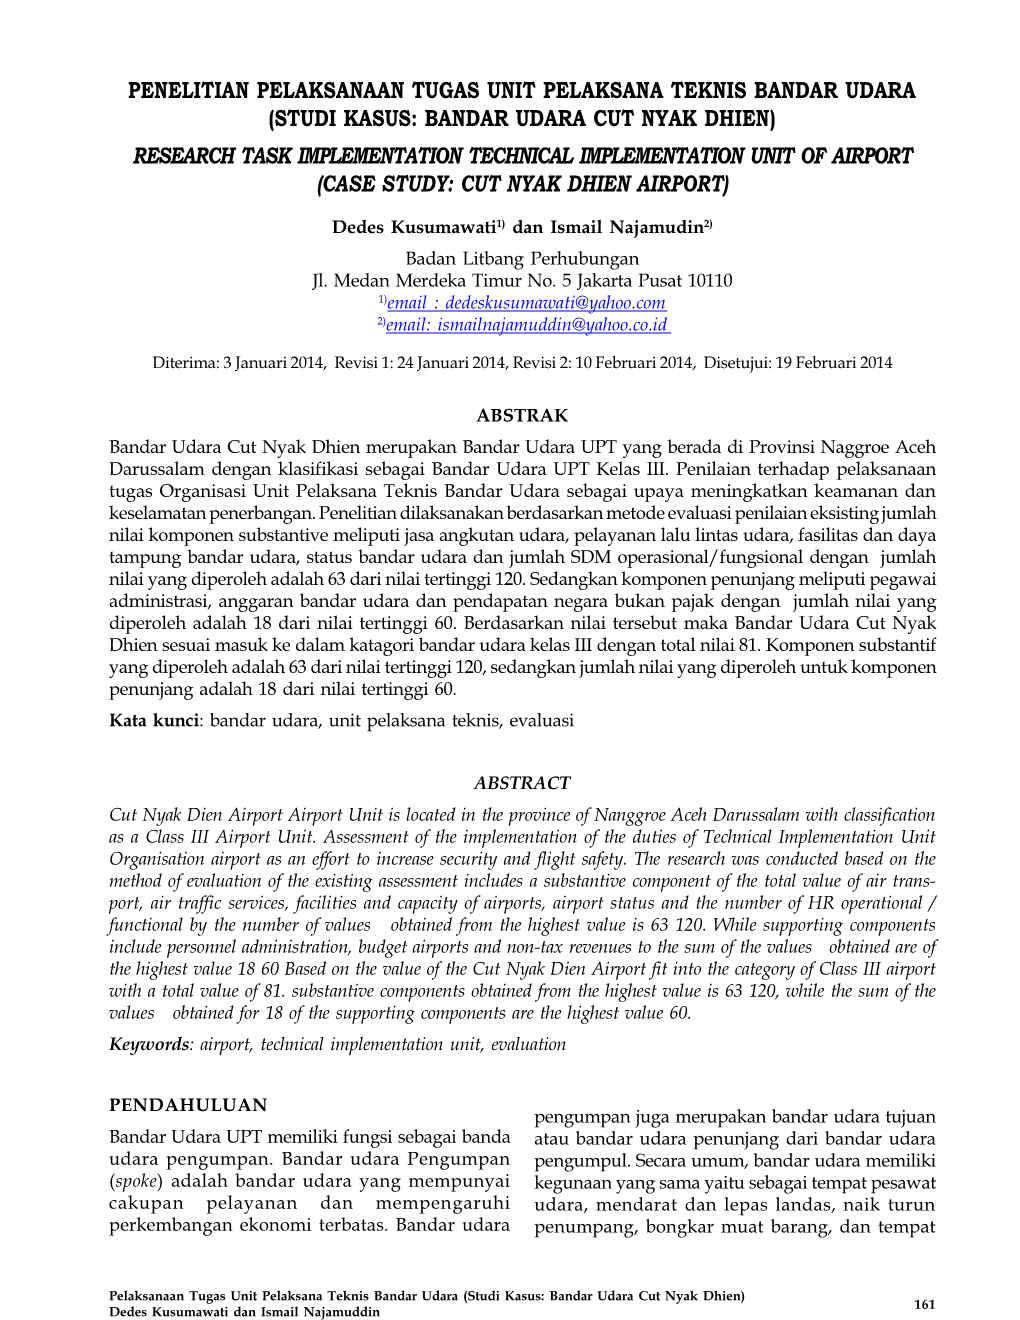 Studi Kasus: Bandar Udara Cut Nyak Dhien) Research Task Implementation Technical Implementation Unit of Airport (Case Study: Cut Nyak Dhien Airport)